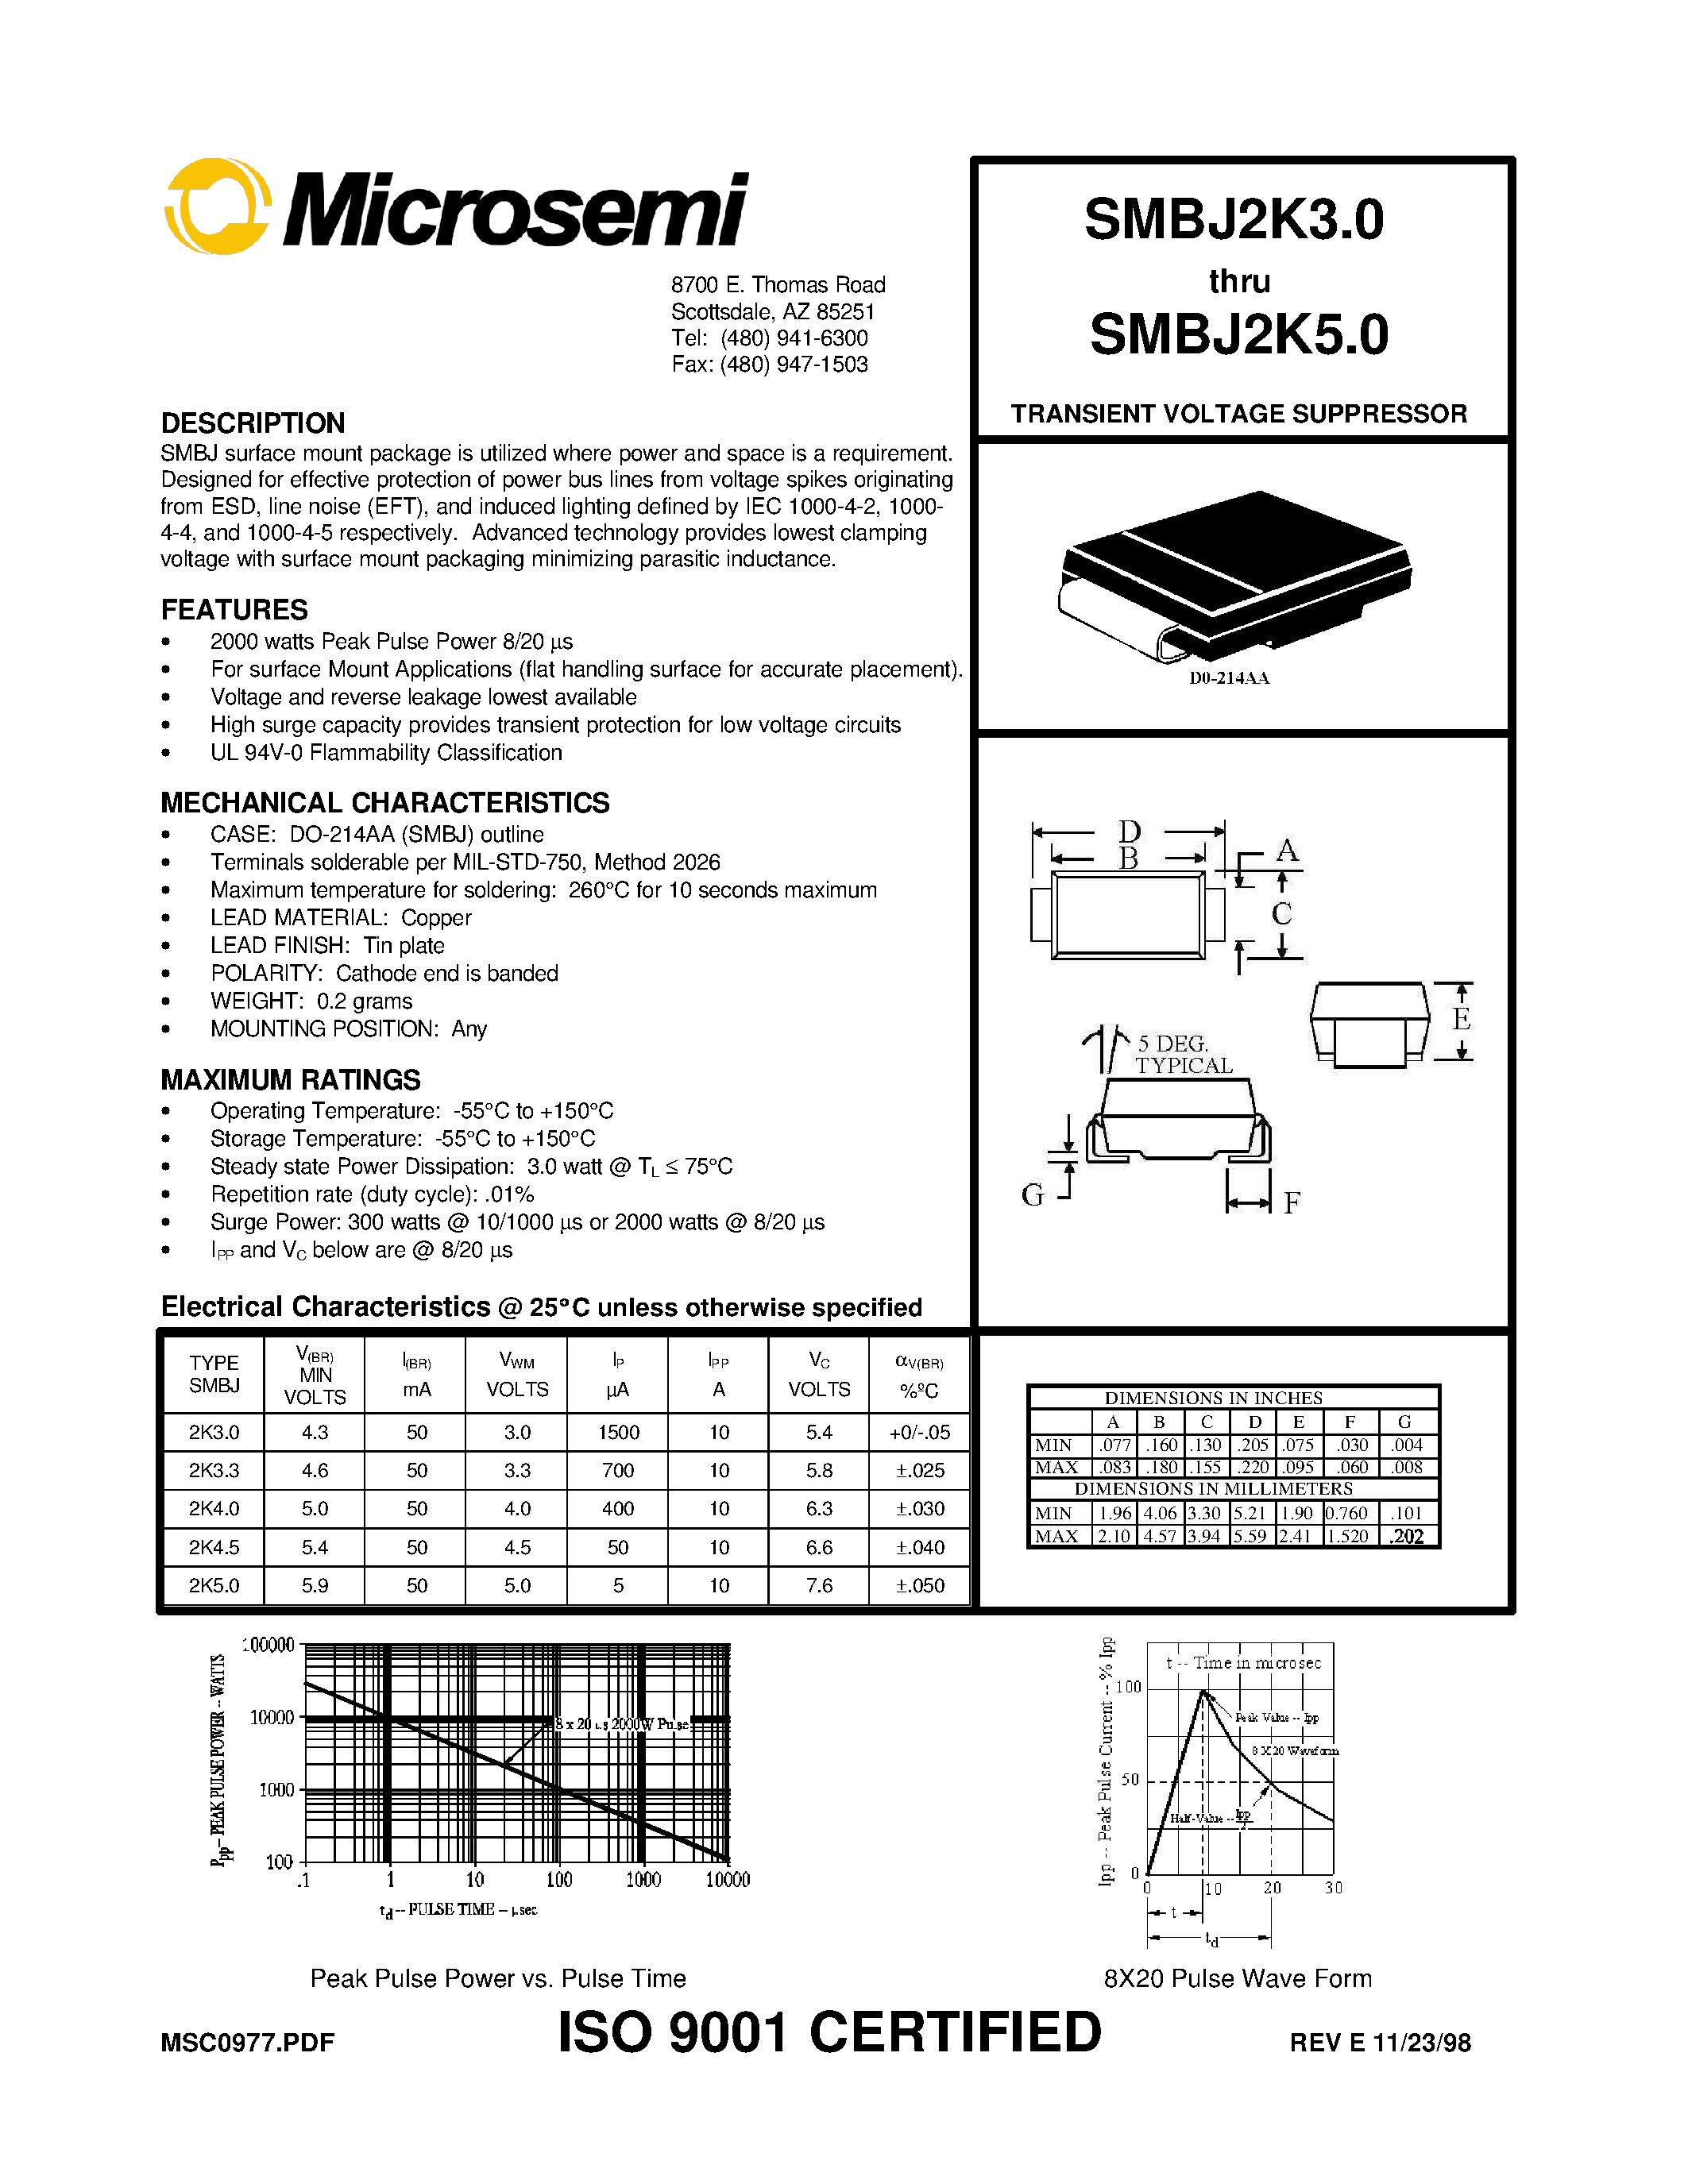 Datasheet SMB2K50 - TRANSIENT VOLTAGE SUPPRESSOR page 1